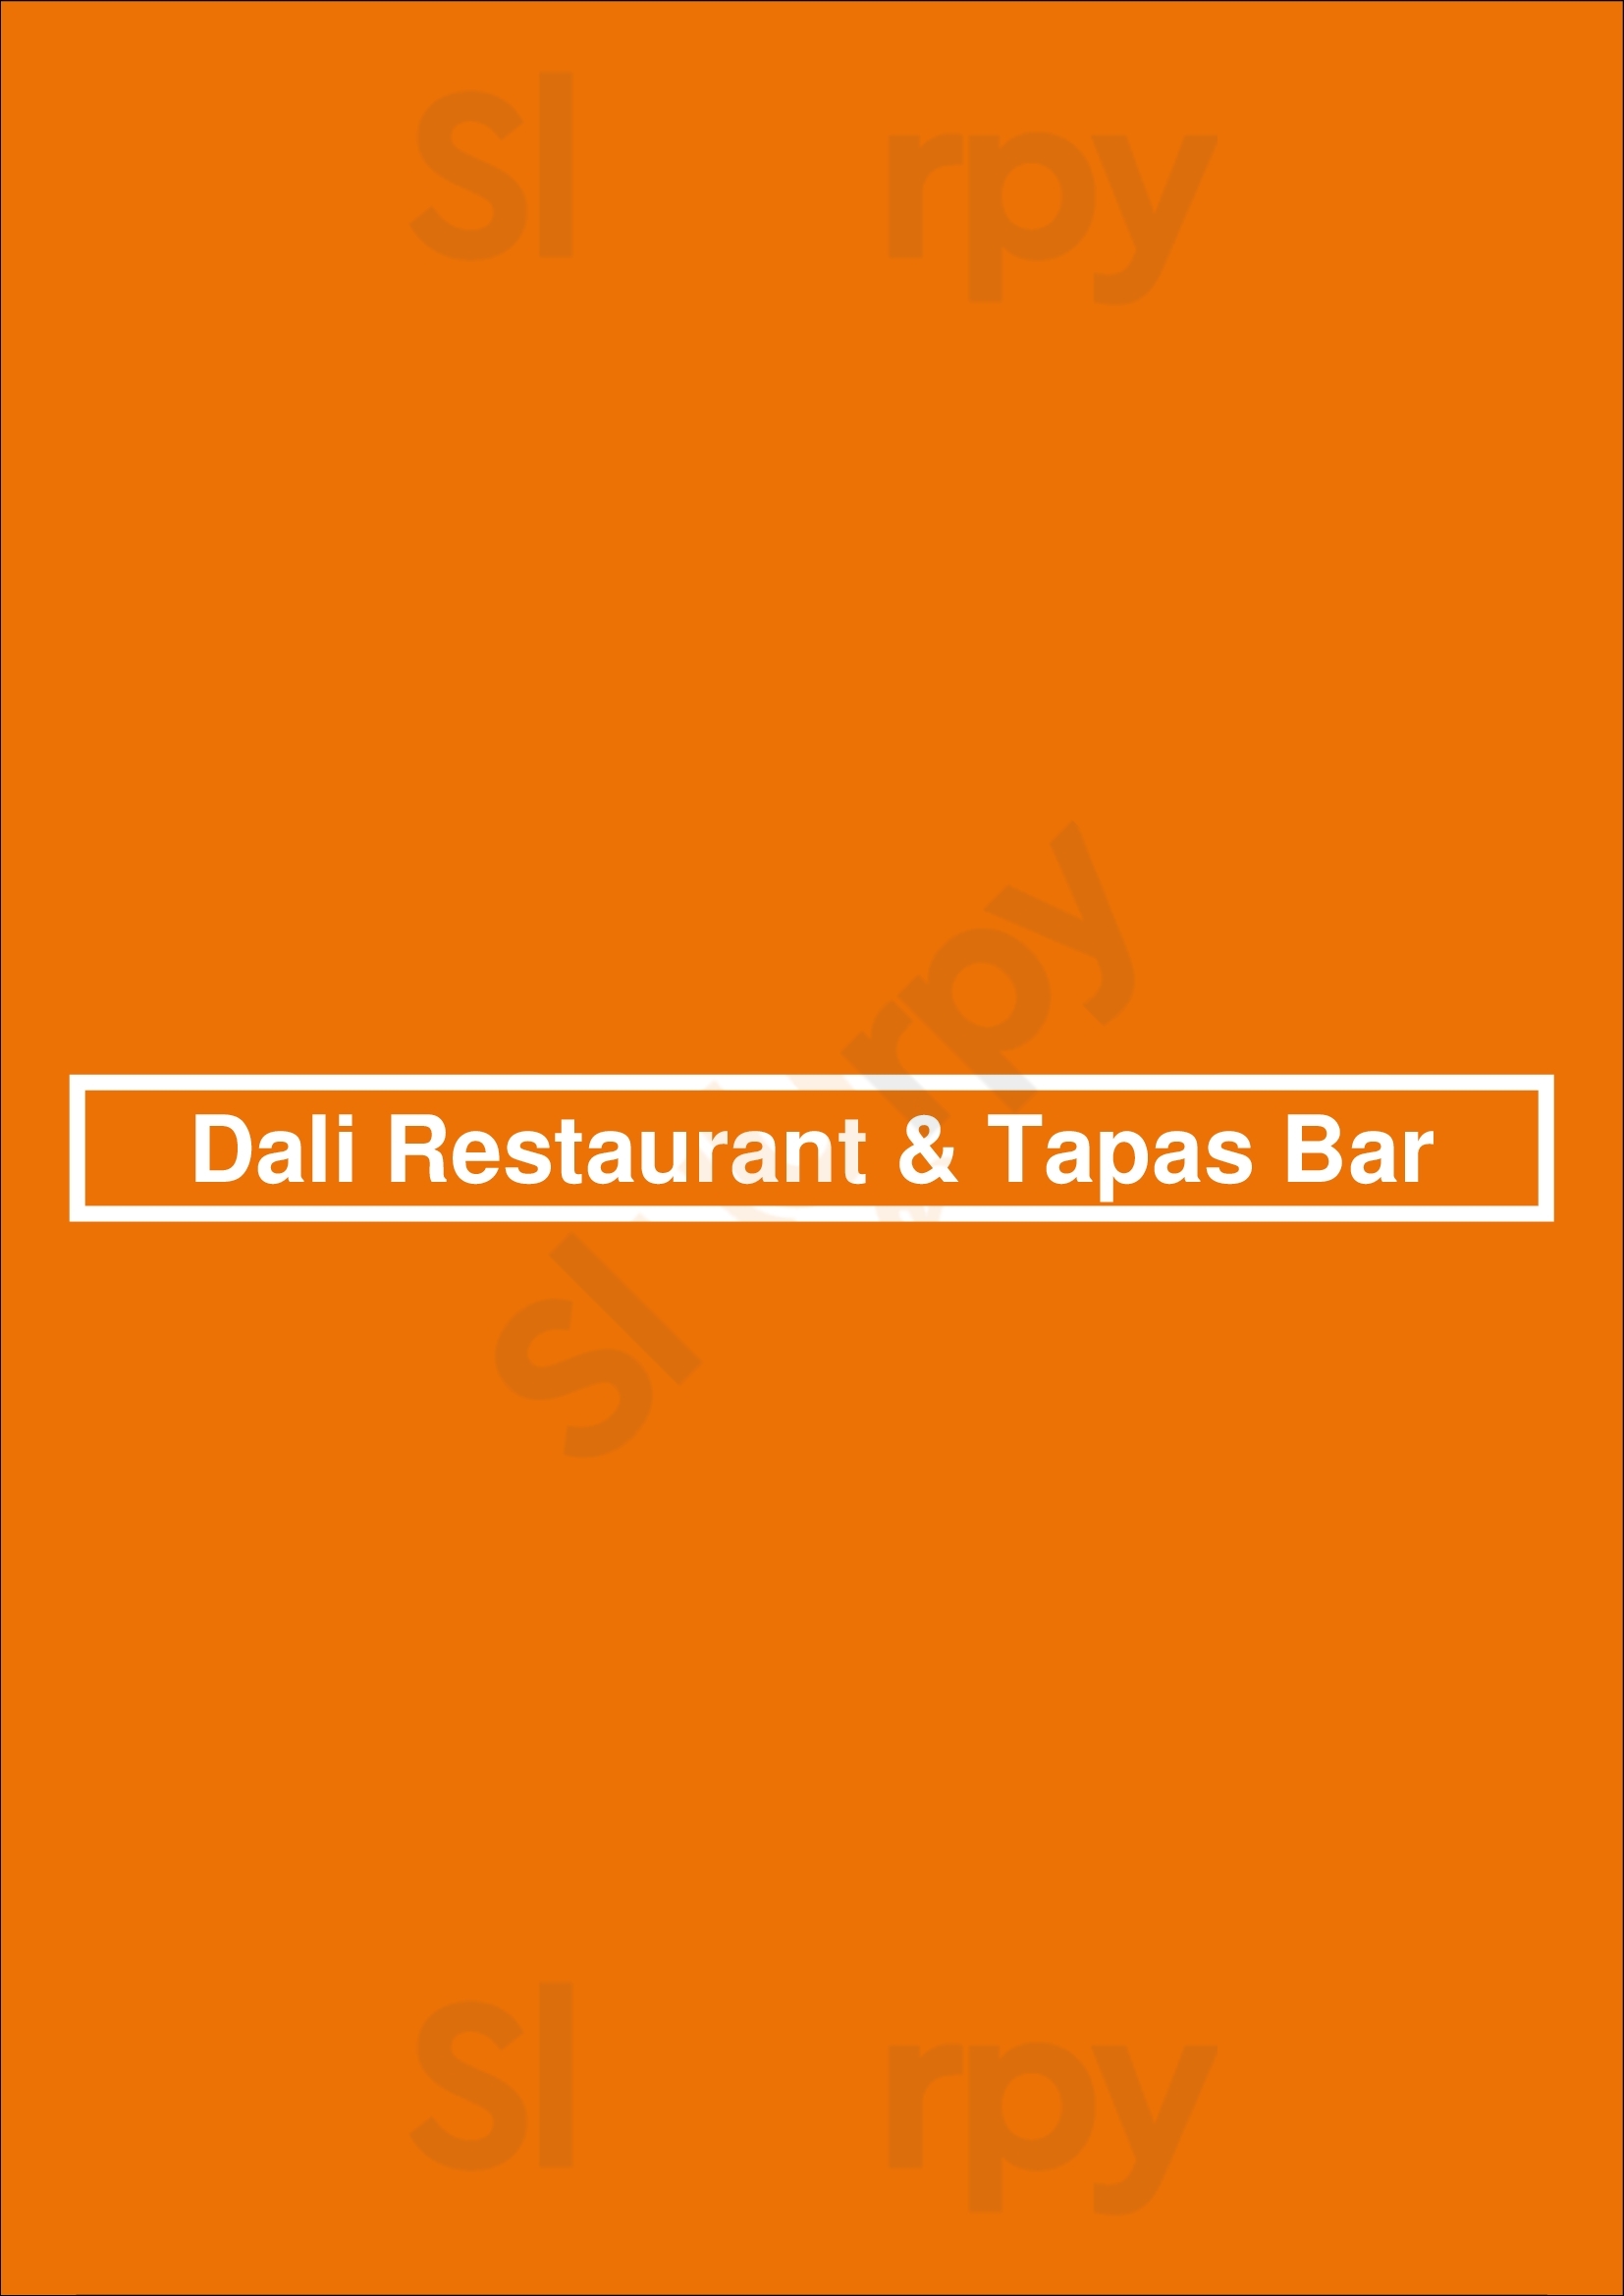 Dali Restaurant & Tapas Bar Somerville Menu - 1